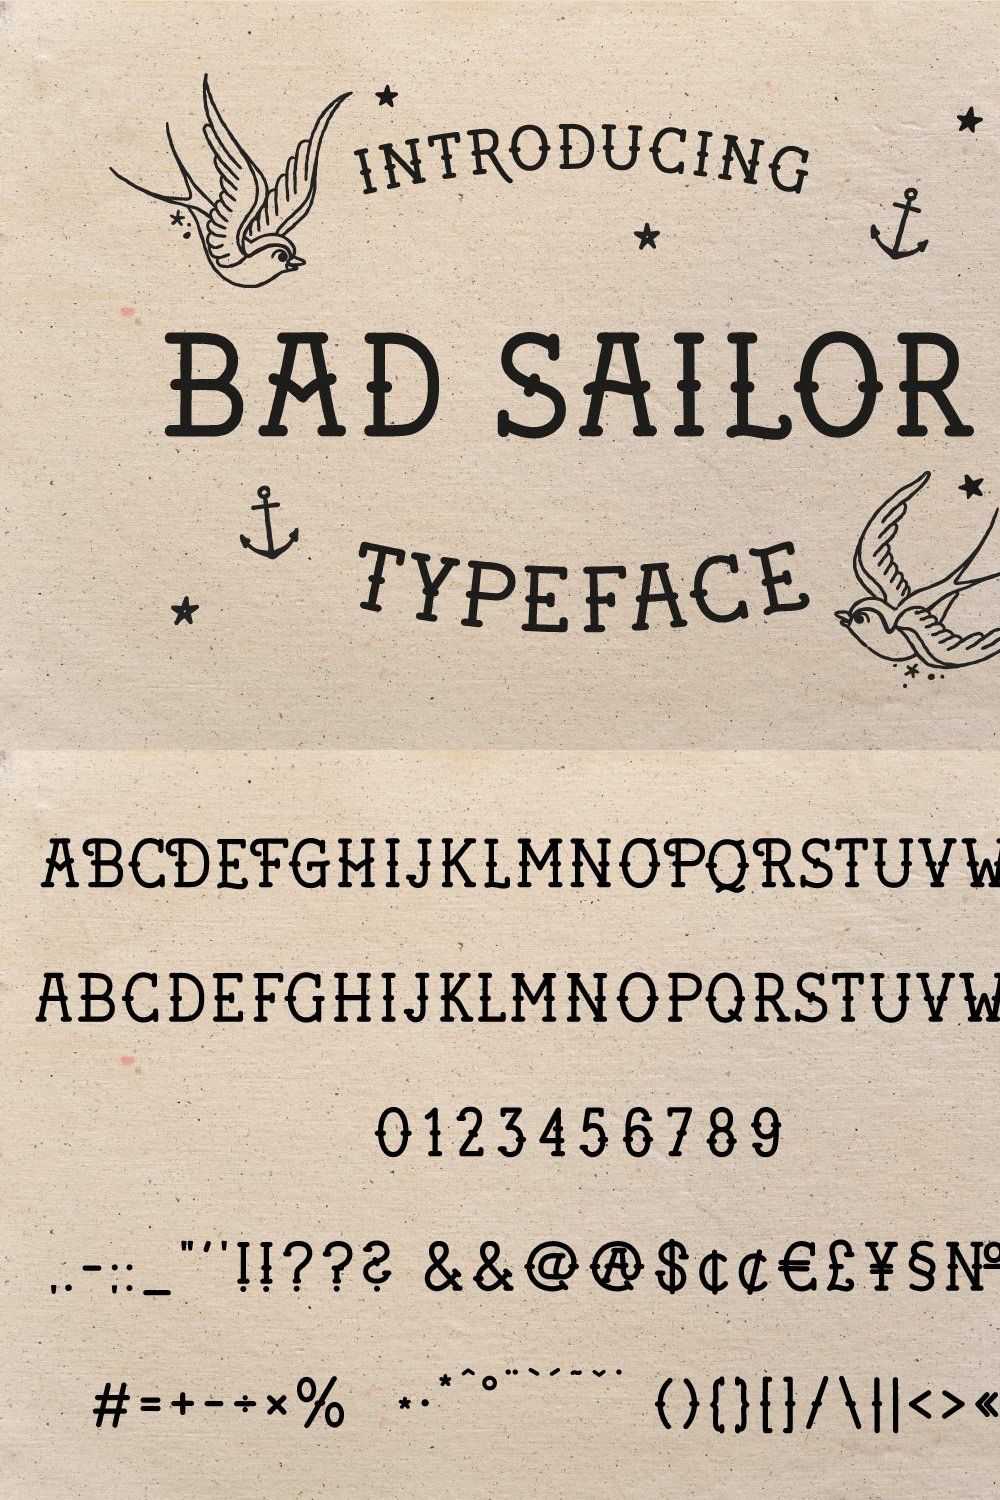 Bad Sailor Typeface pinterest preview image.